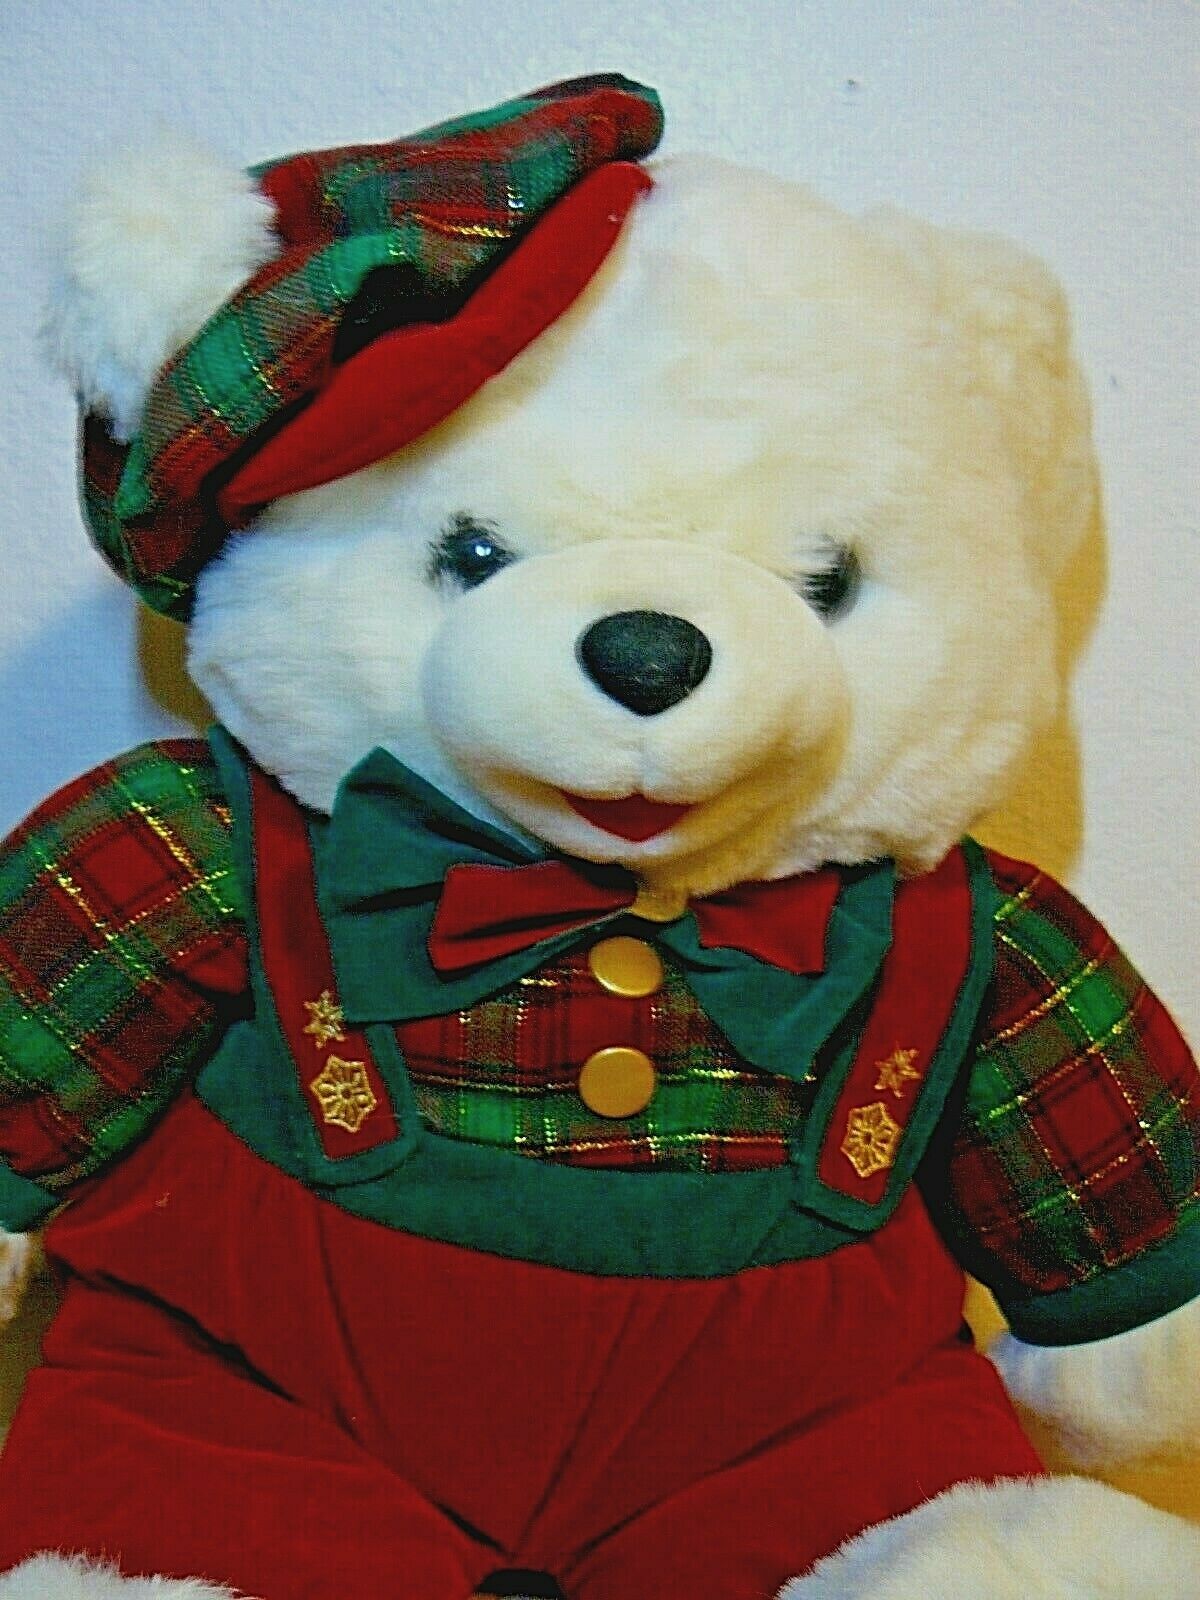 1996 SnowFlake Teddy Bear White Stuffed Plush Animal 19